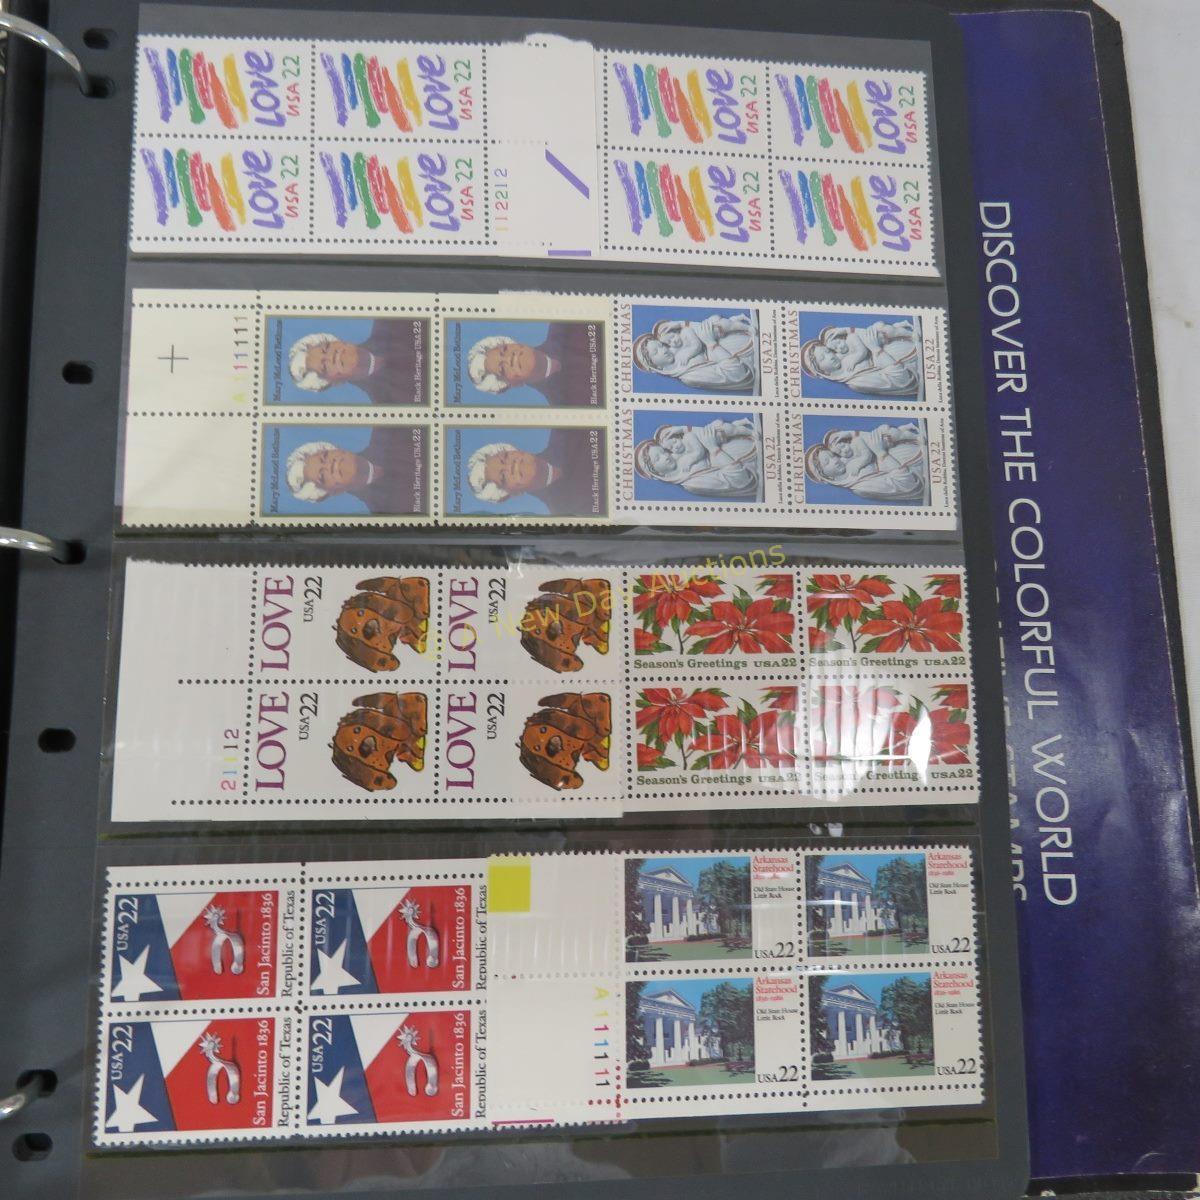 Mint US stamps commemoratives & blocks